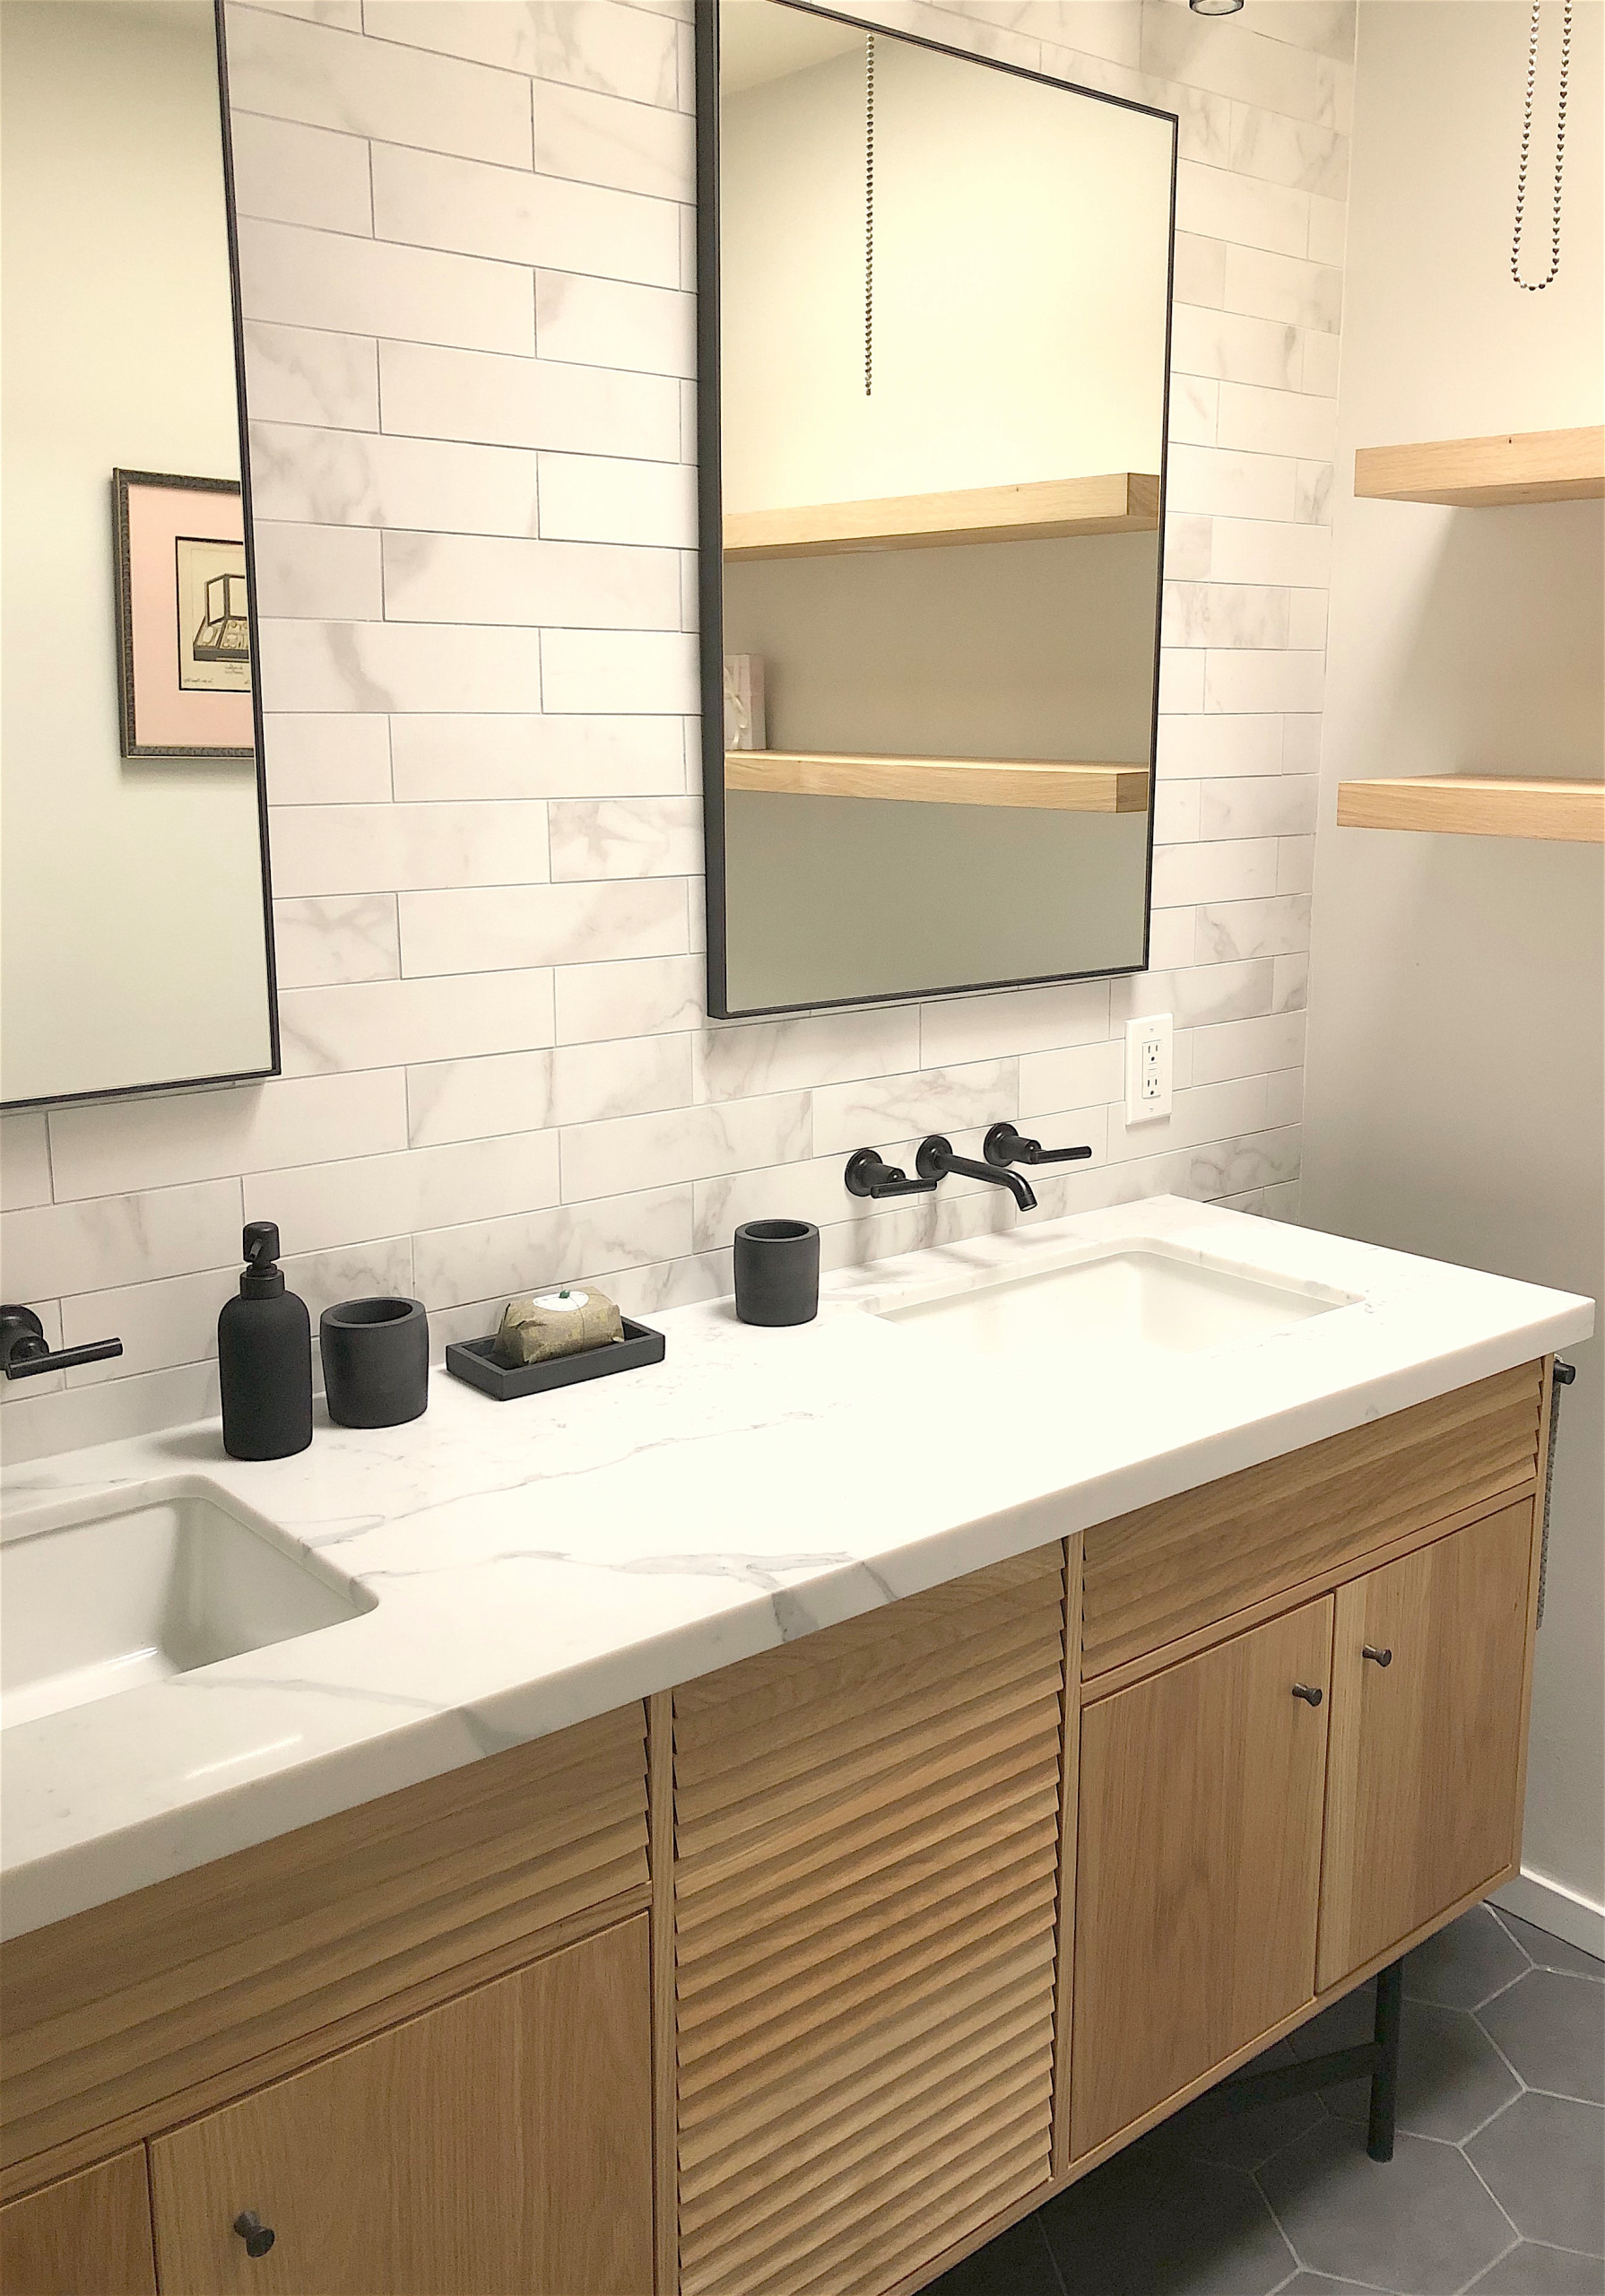 Tiny Daly City Bathroom gets renovated, 2020